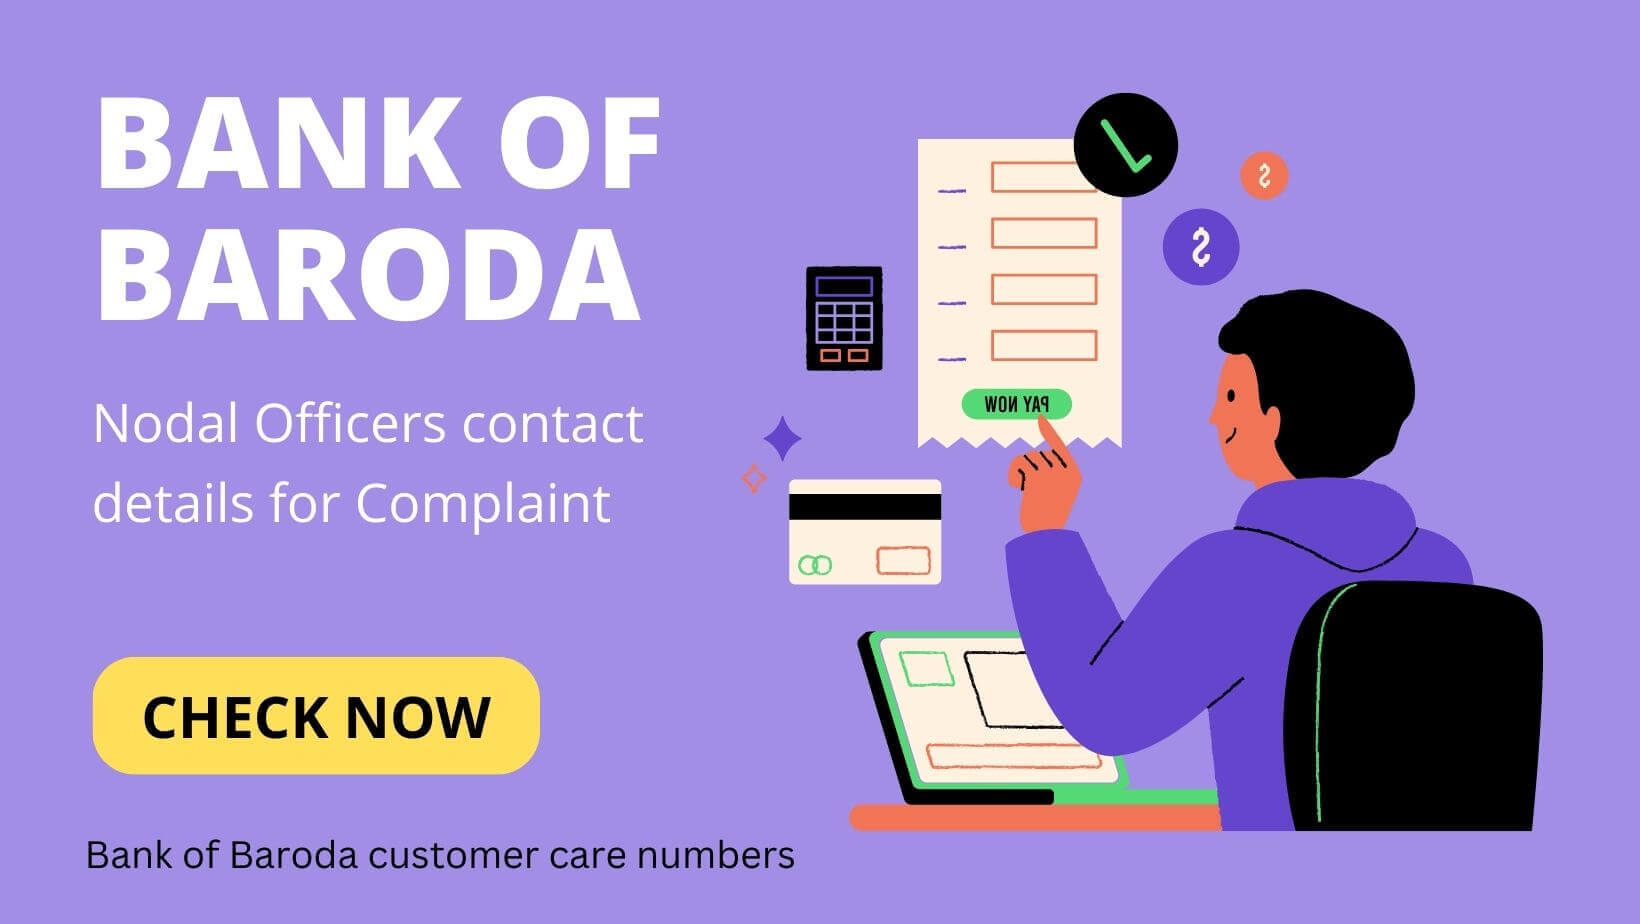 Bank of Baroda Customer Care Number